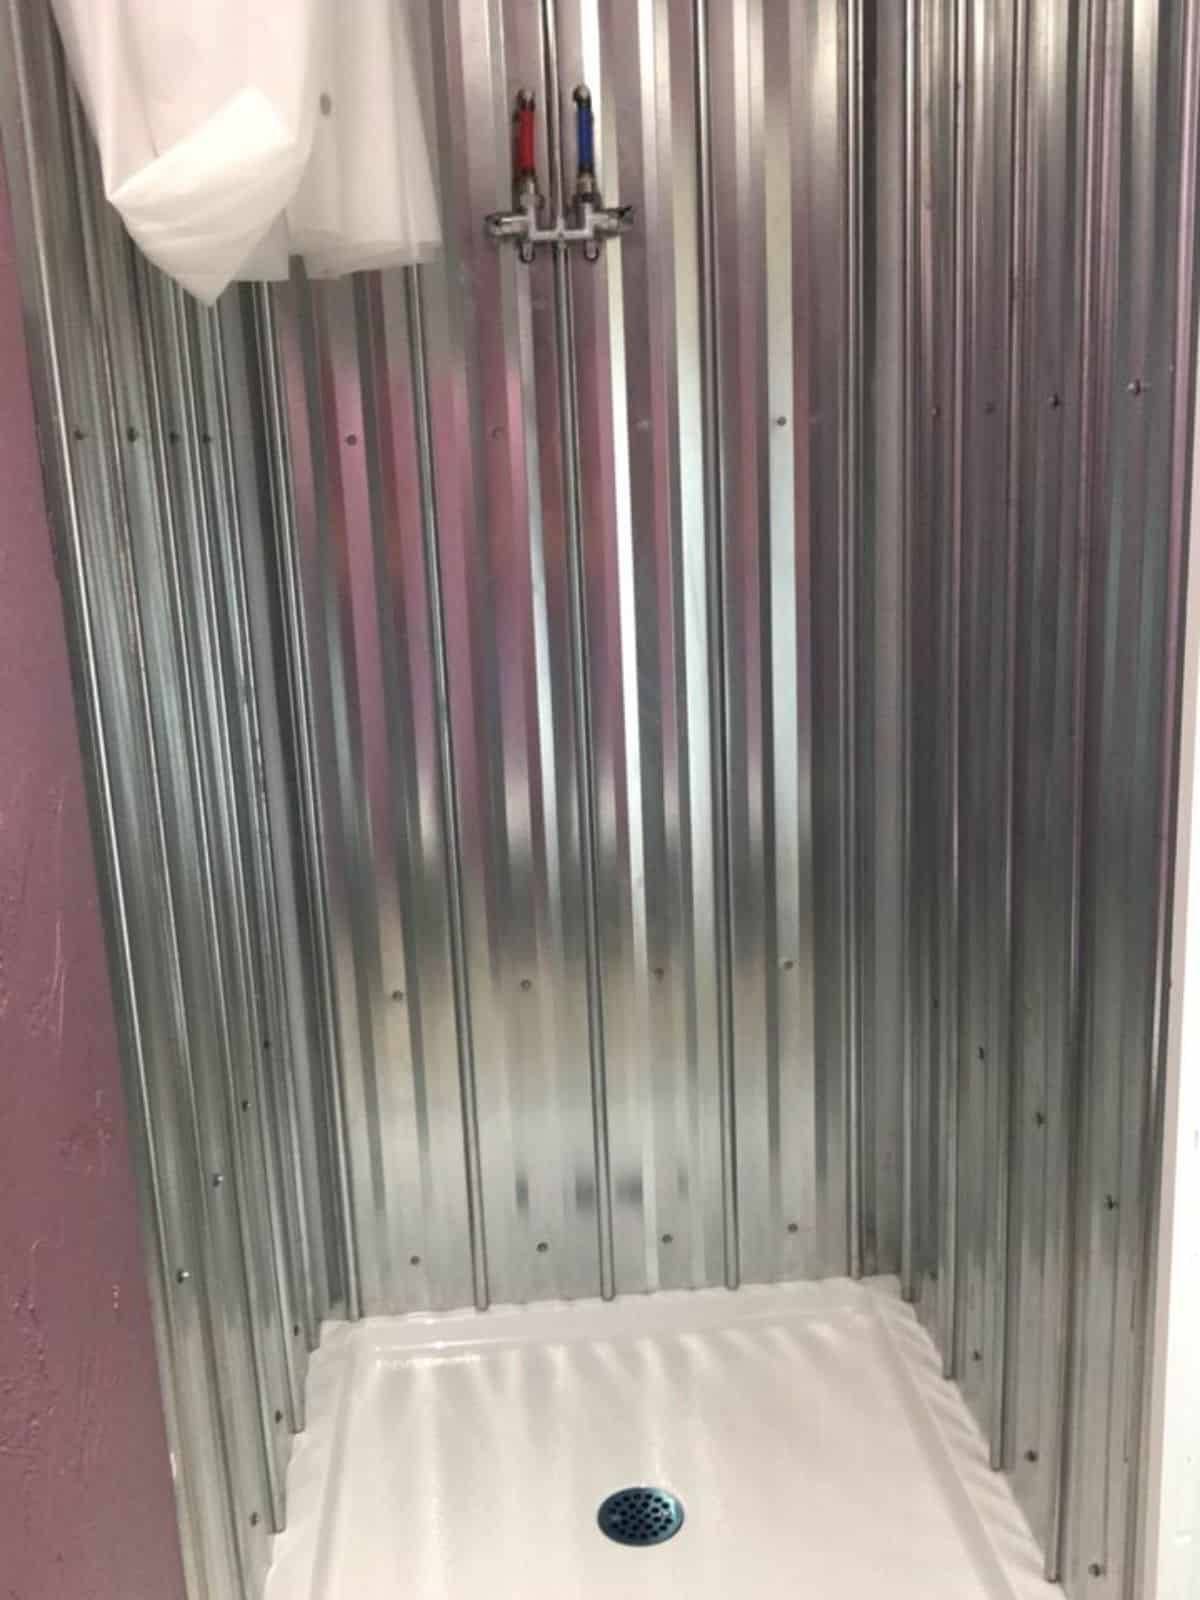 Separate shower area in bathroom